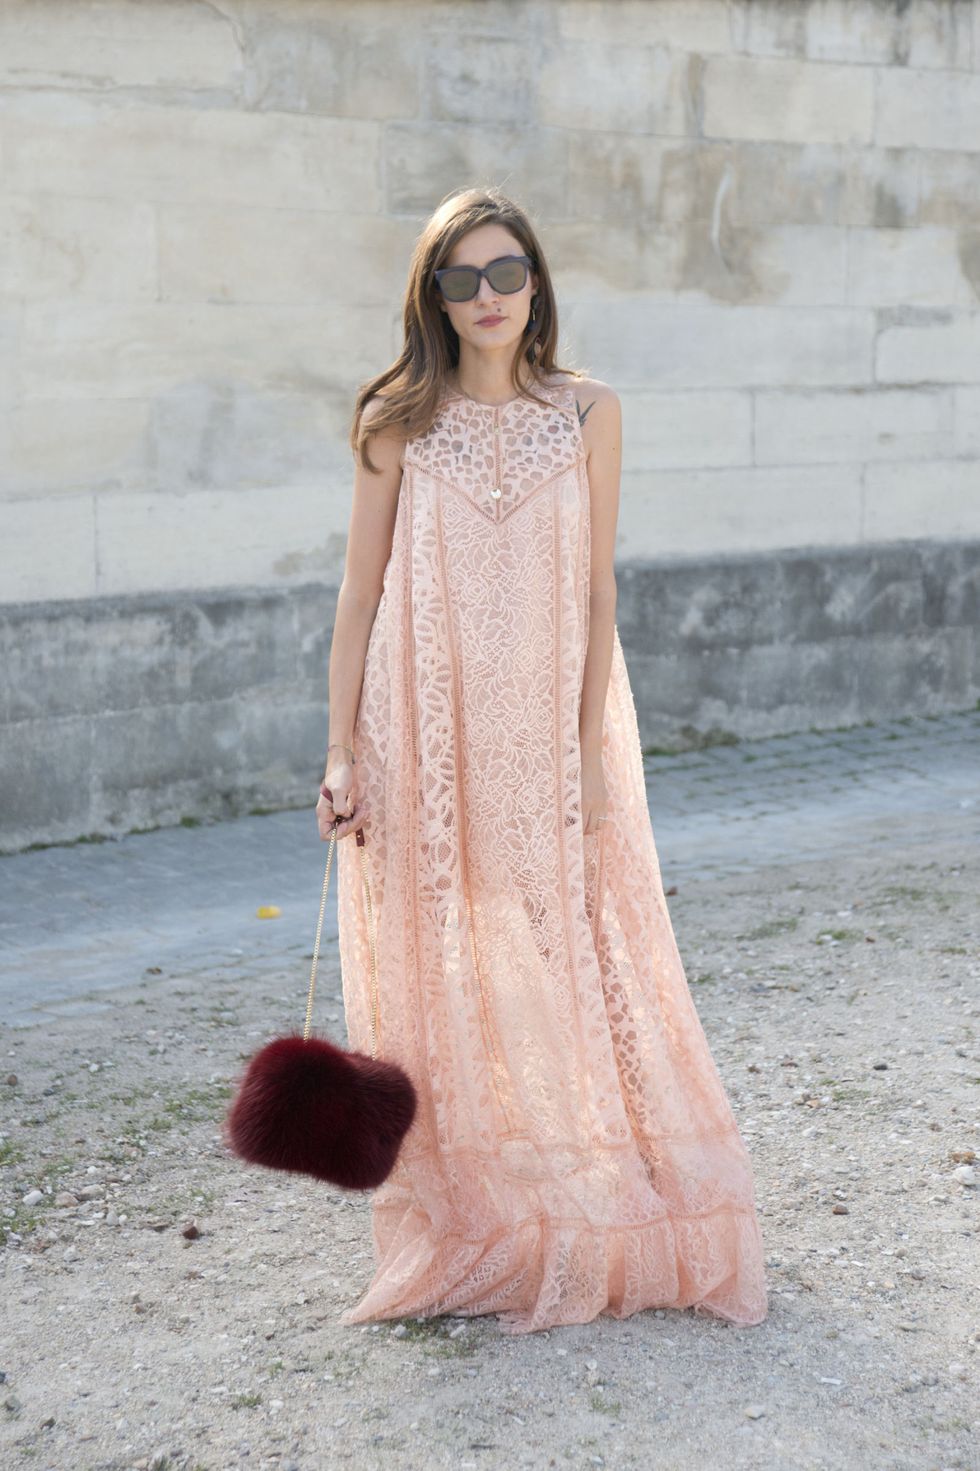 moda 2016 street style look monocromatico rosa